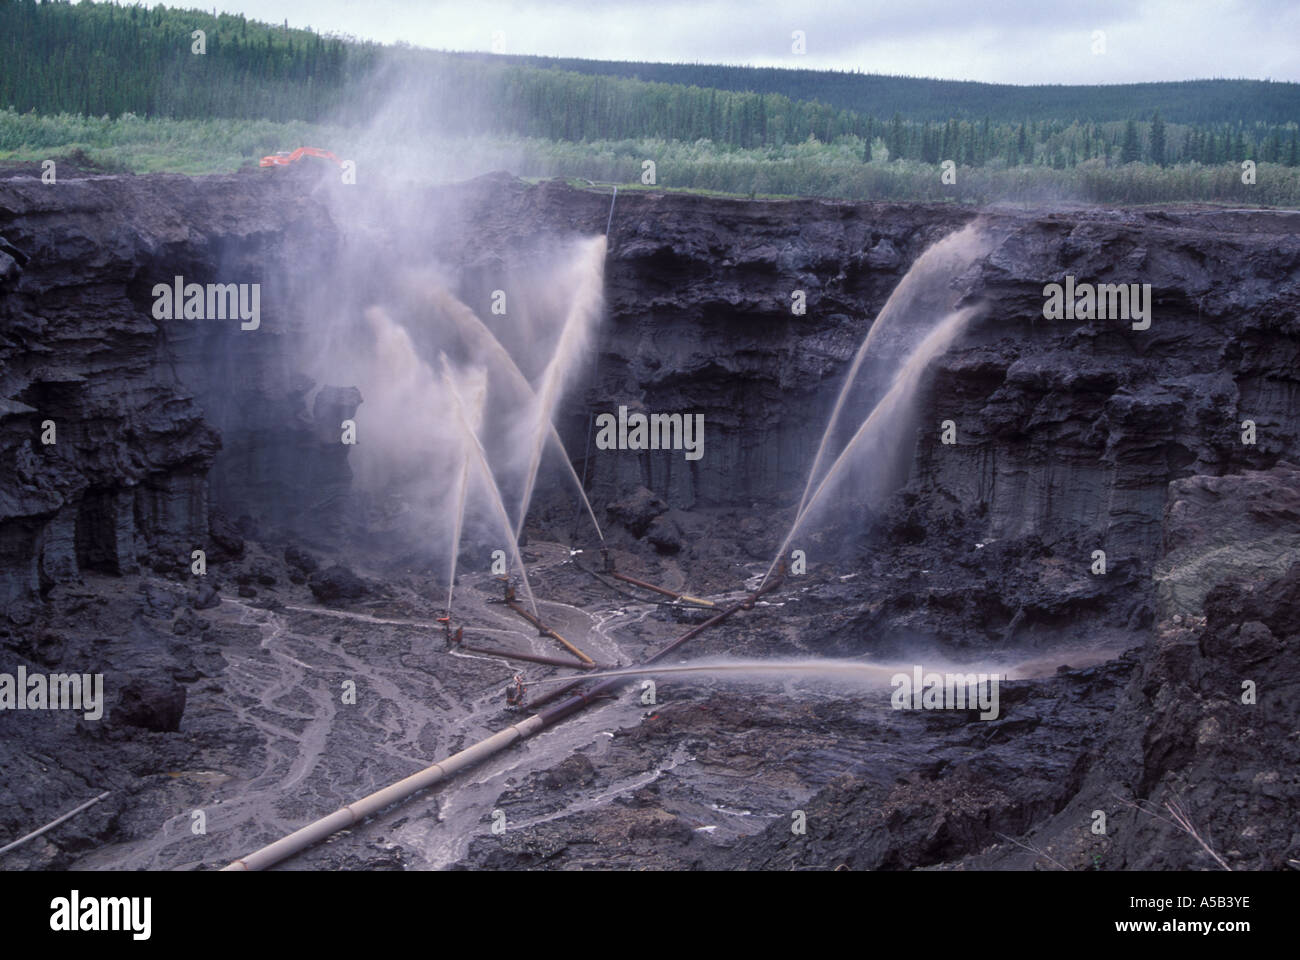 High pressure waterhoses flush dirt from permafrost ground goldmining, Livengood, Alaska Stock Photo